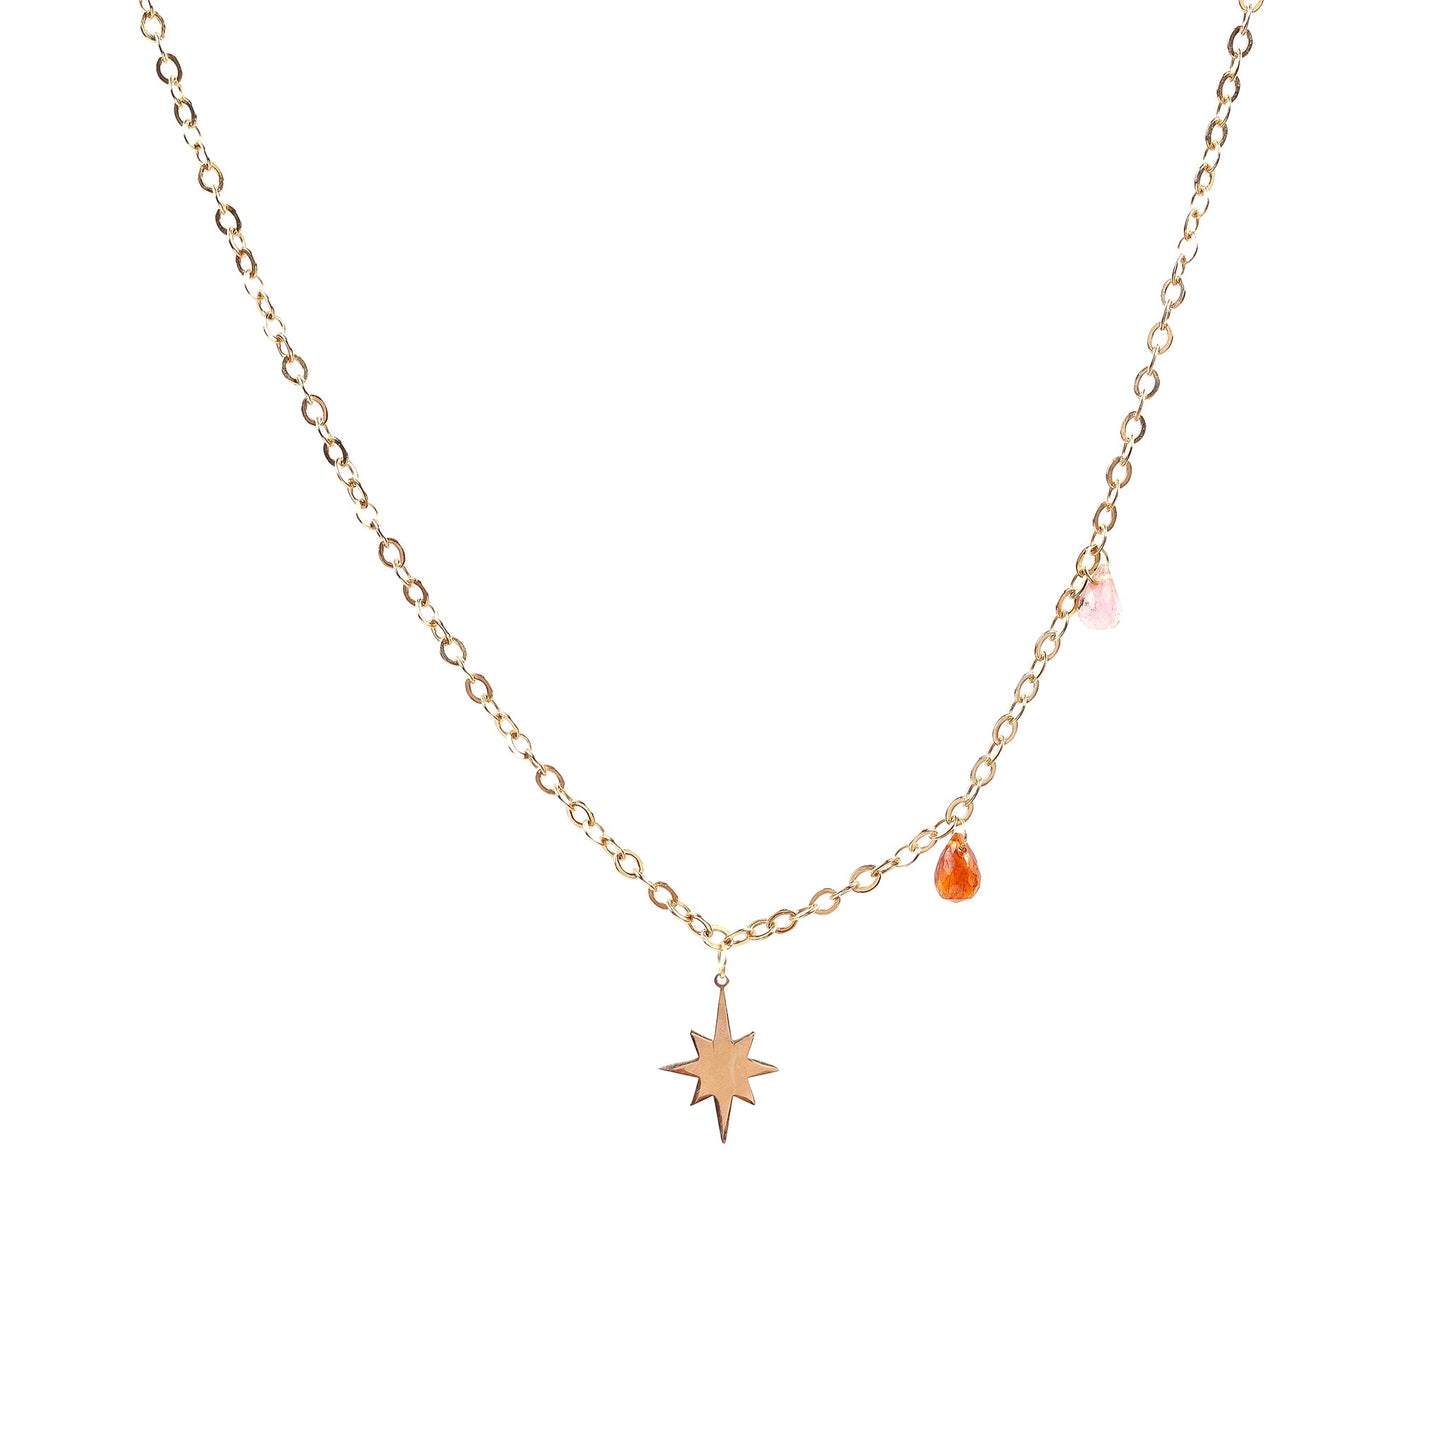 The North Star Necklace - Oria.jewelry